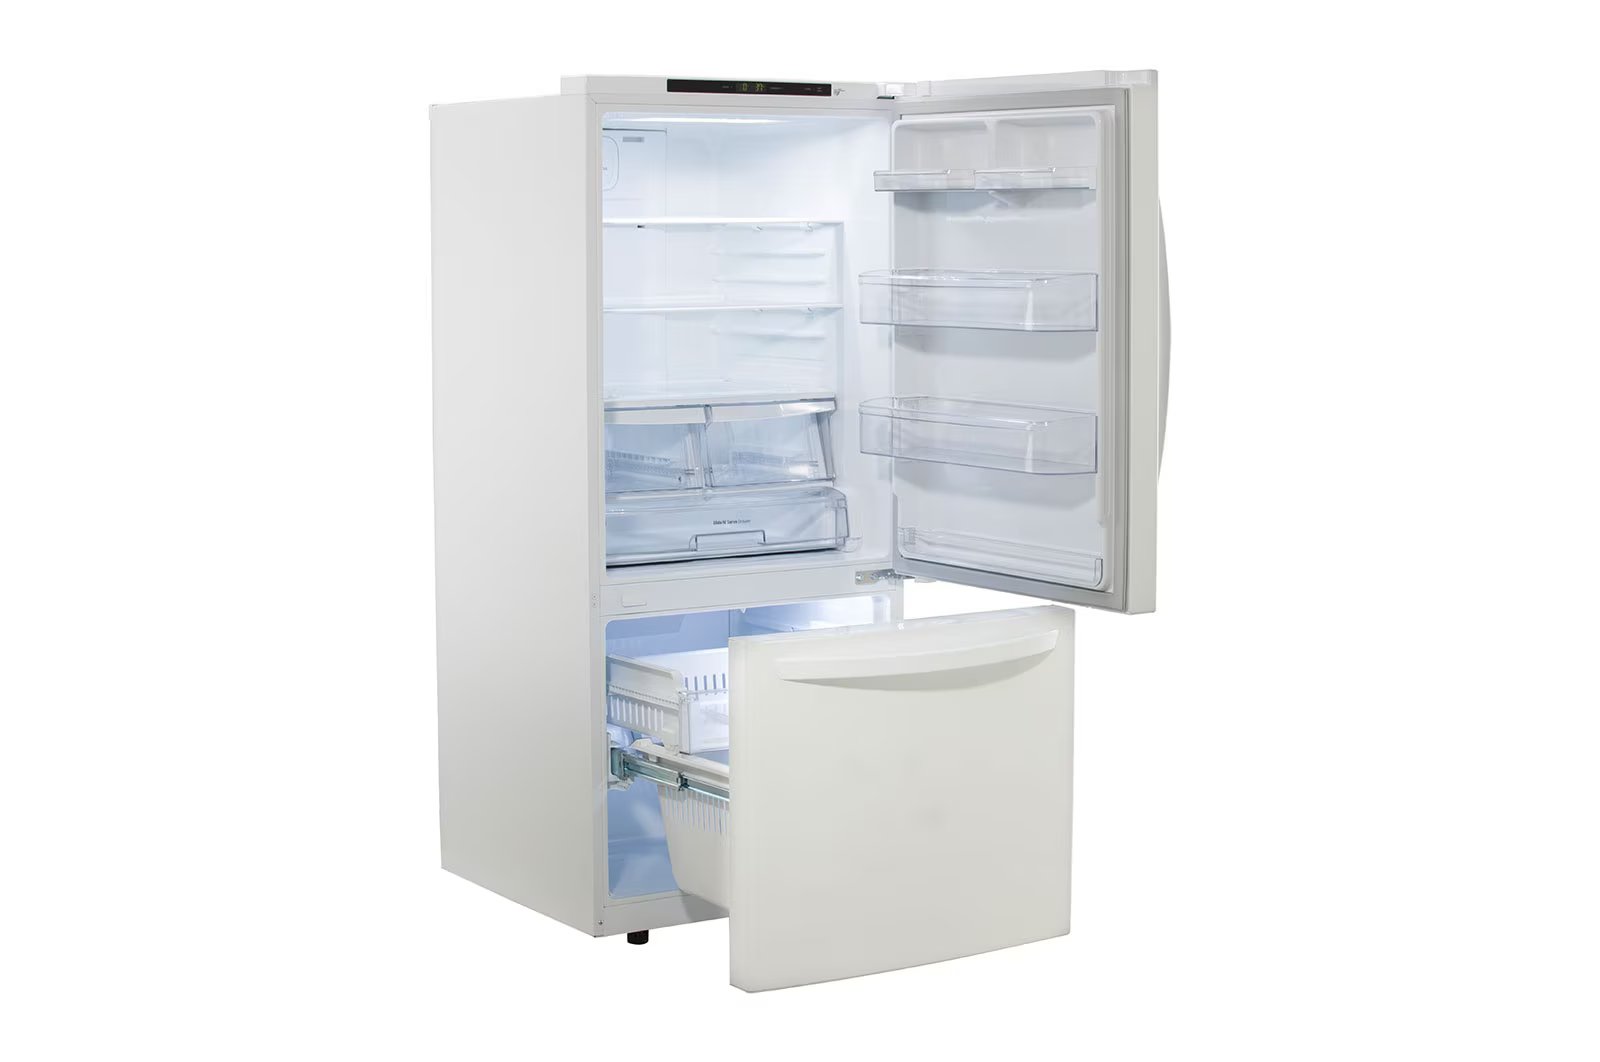 LG - 29.75 Inch 22.1 cu. ft Bottom Mount Refrigerator in White - LRDNS2200W